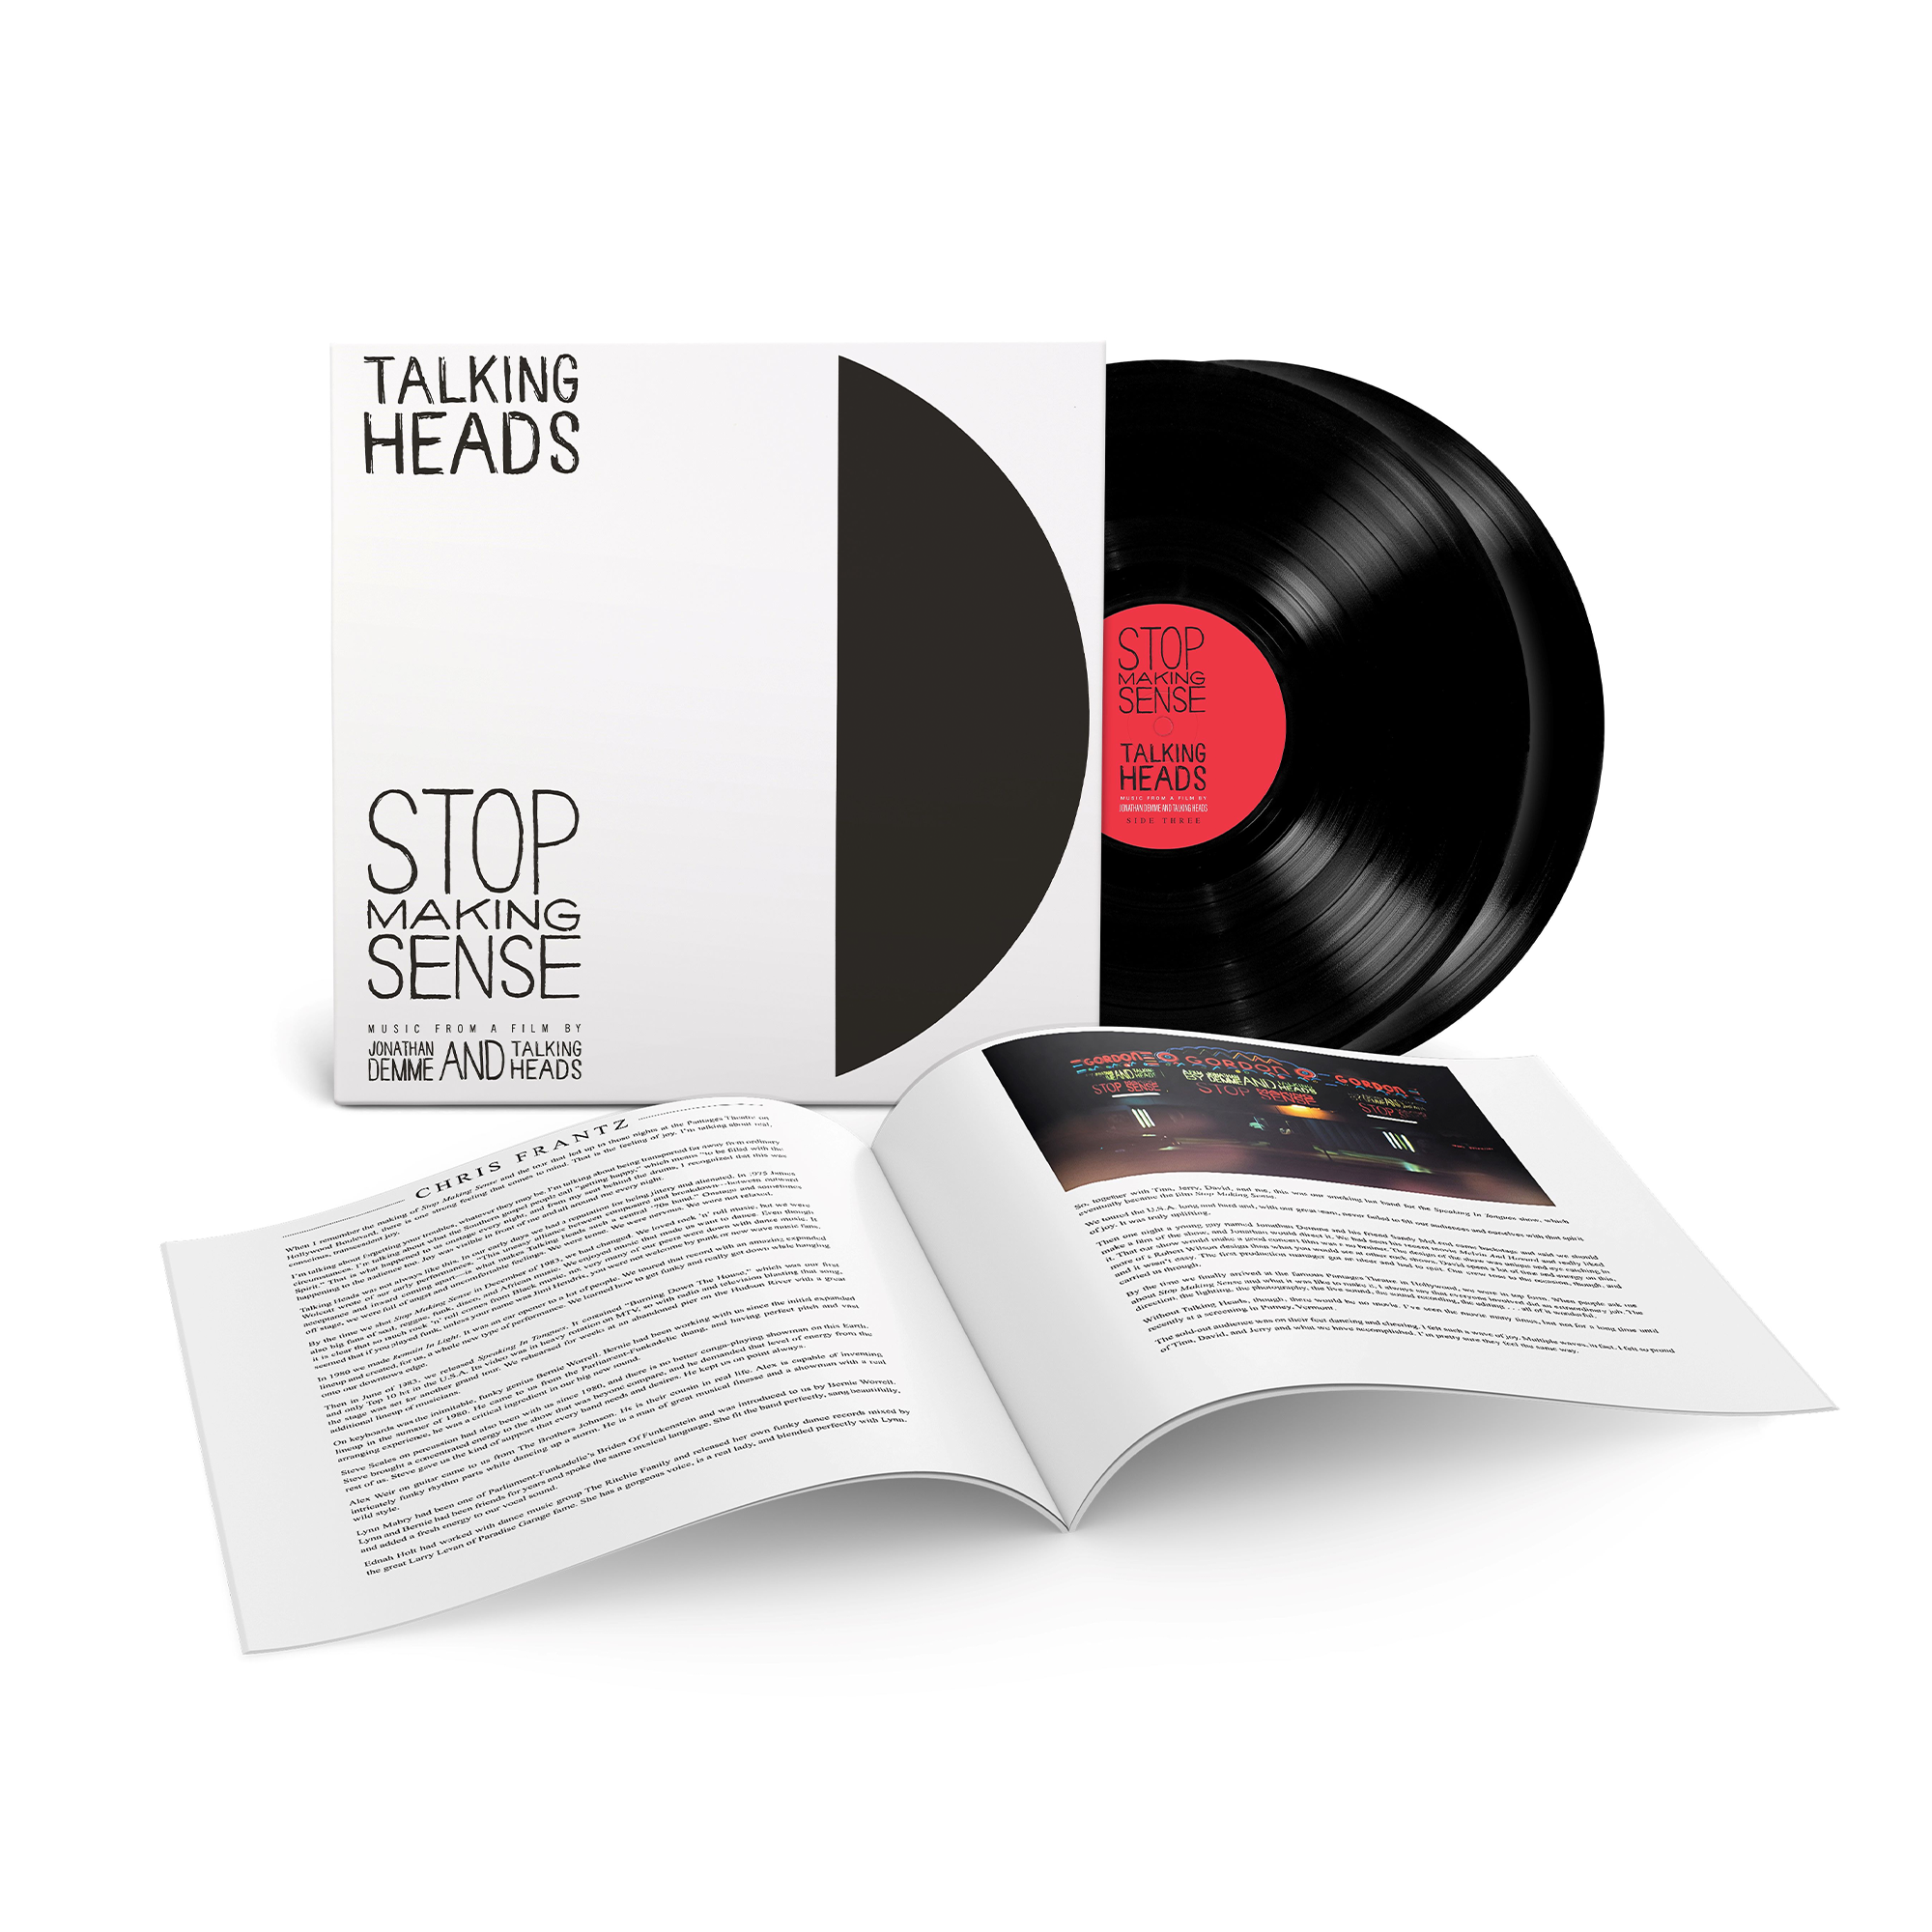 Talking Heads - Stop Making Sense: Deluxe Vinyl 2LP